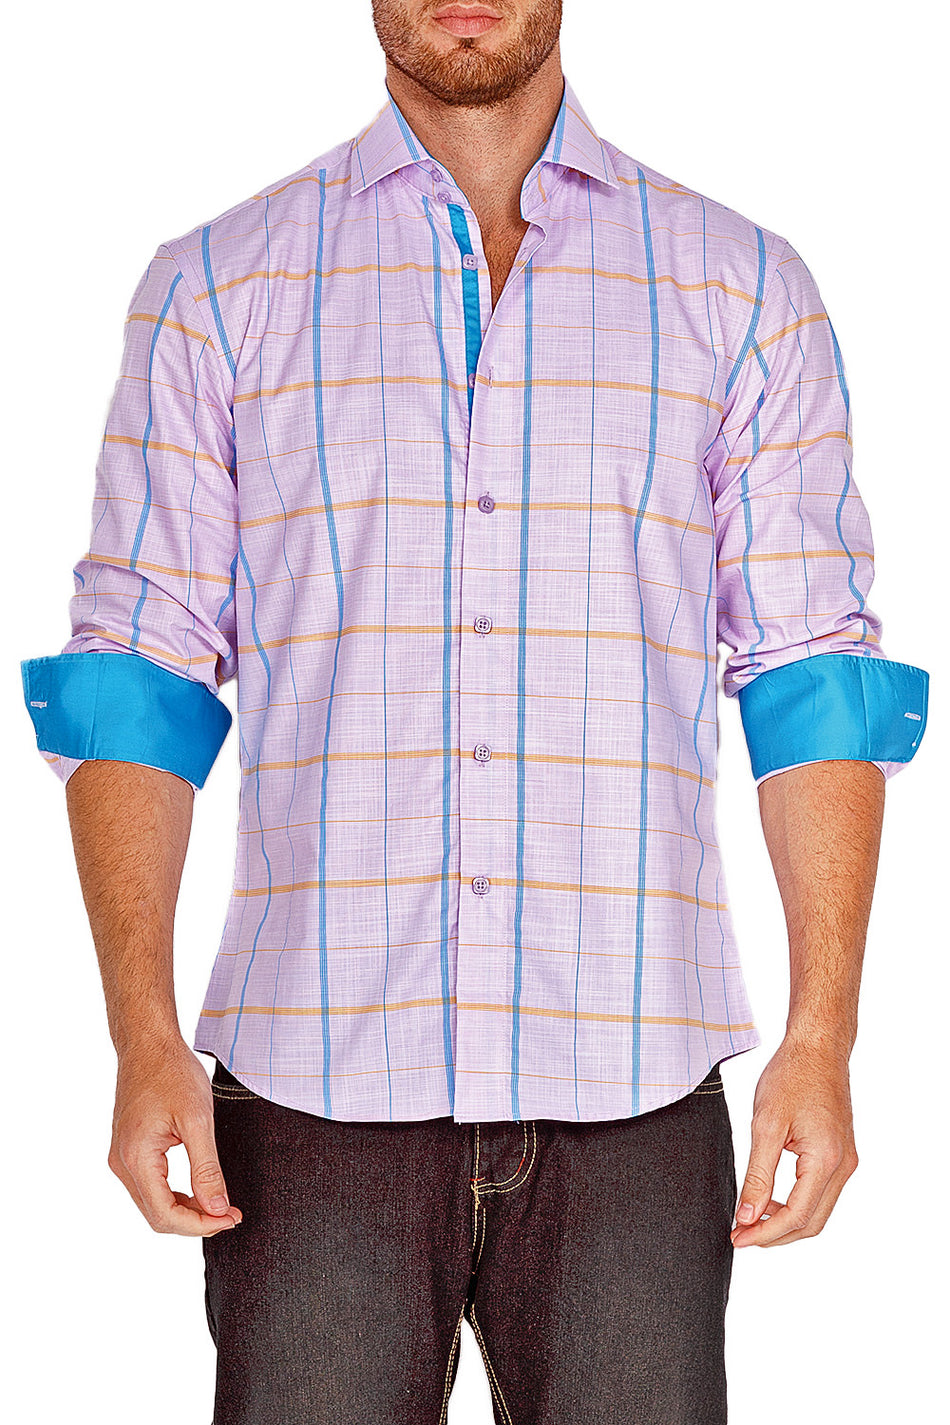 Lavender Plaid Button Up Long Sleeve Dress Shirt